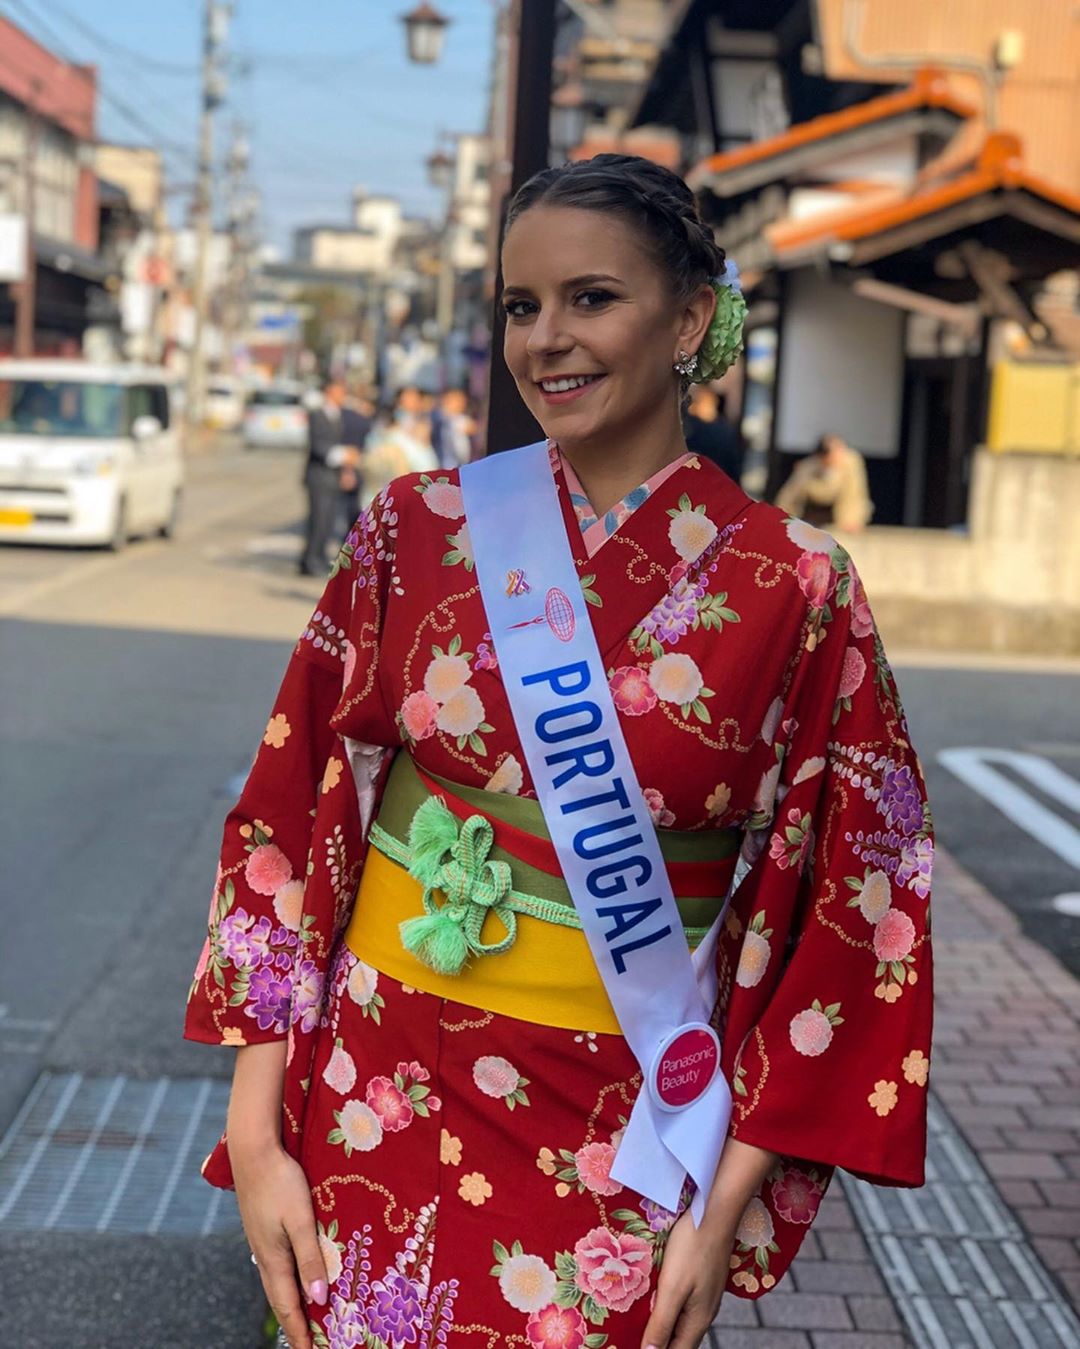 candidatas a miss international 2019 usando tradicional traje tipico japones. D9kr4rgi